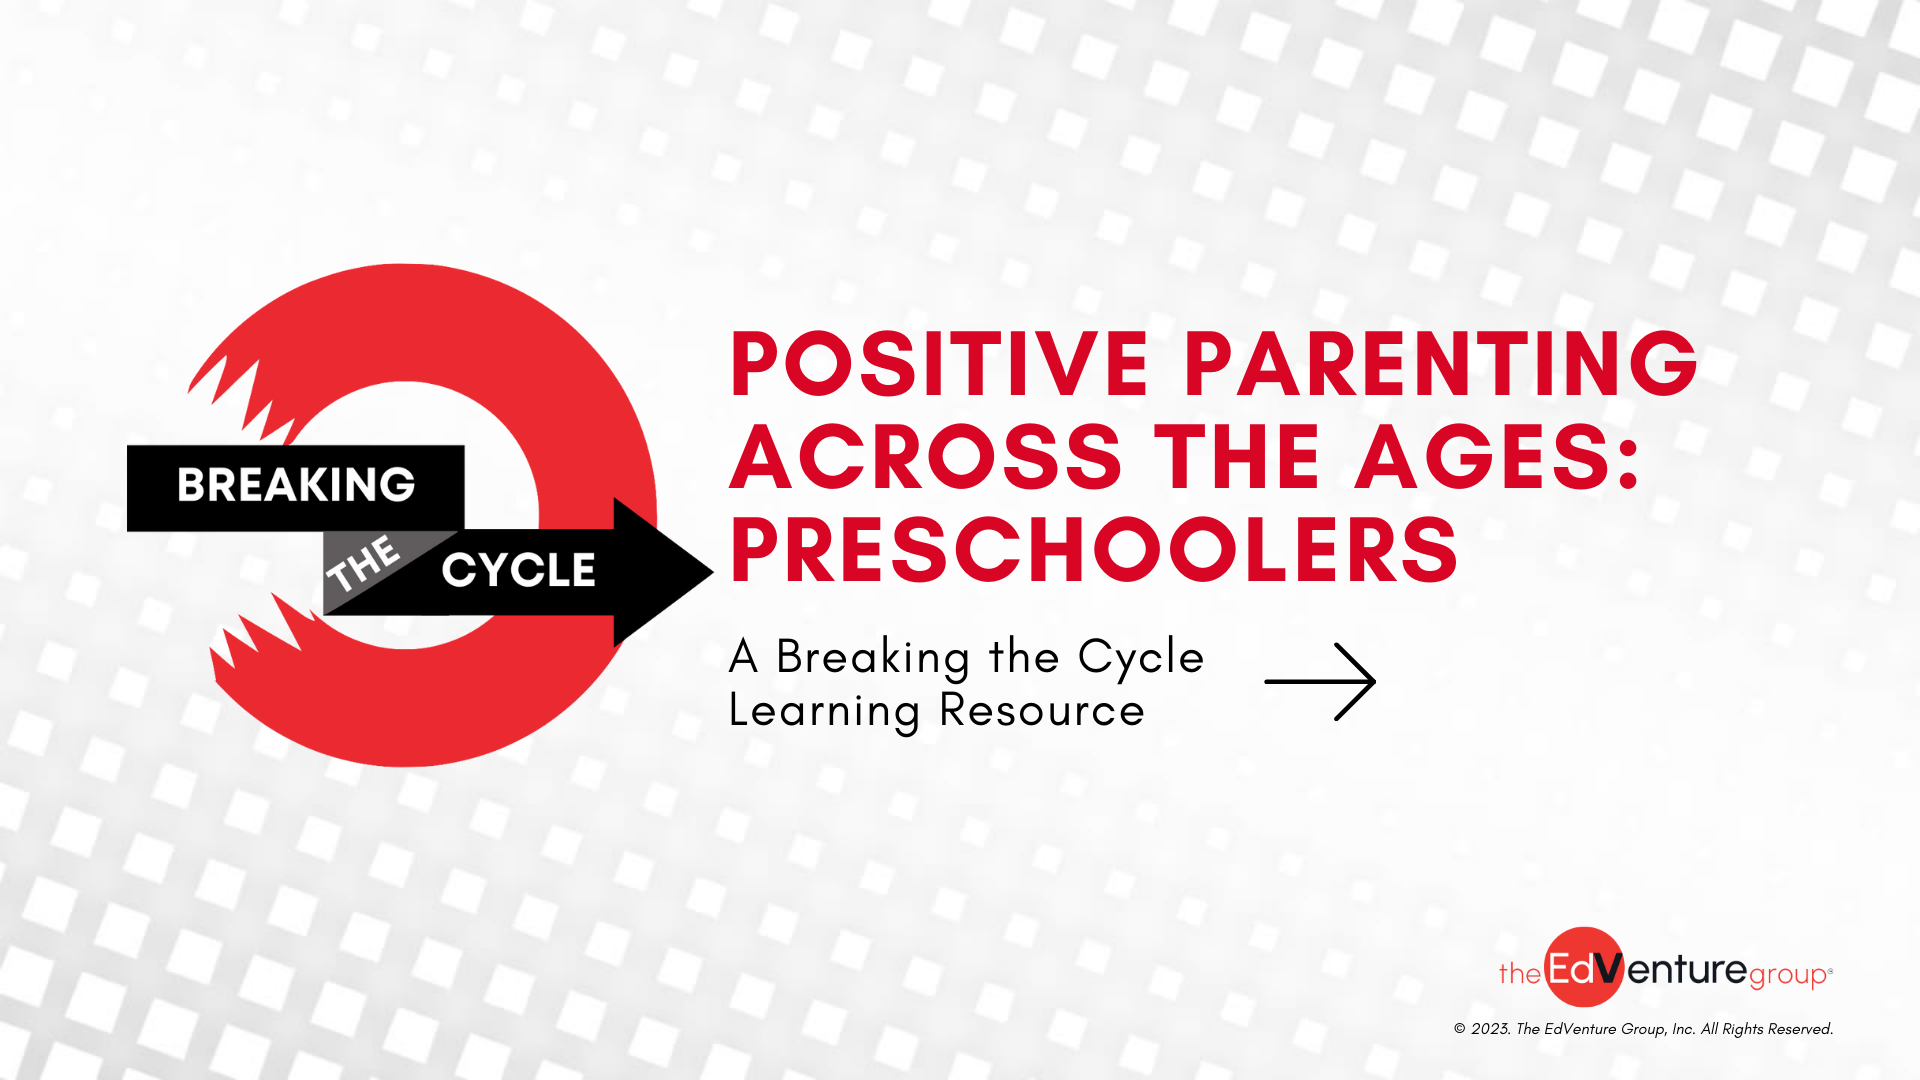 Preschoolers Positive Parenting Across the Ages